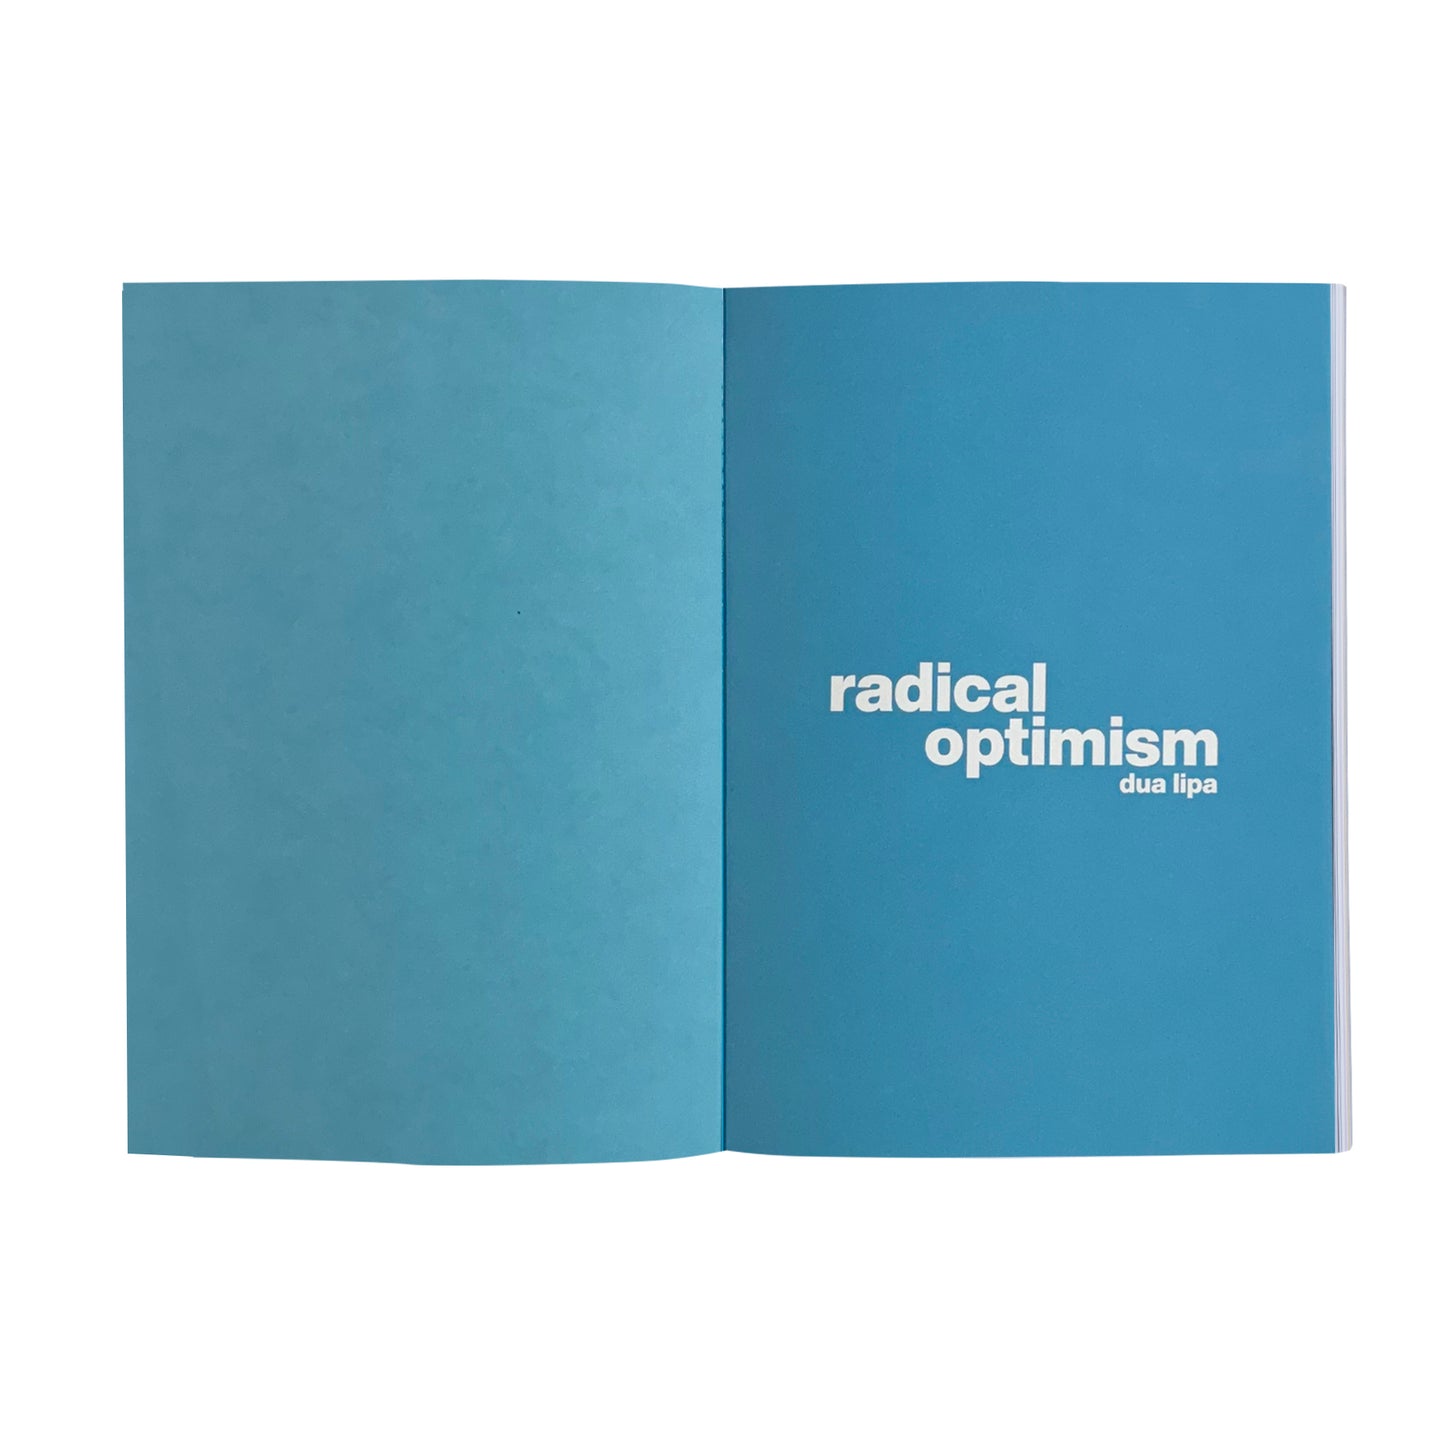 radical optimism handwritten album notebook (signed art card included)